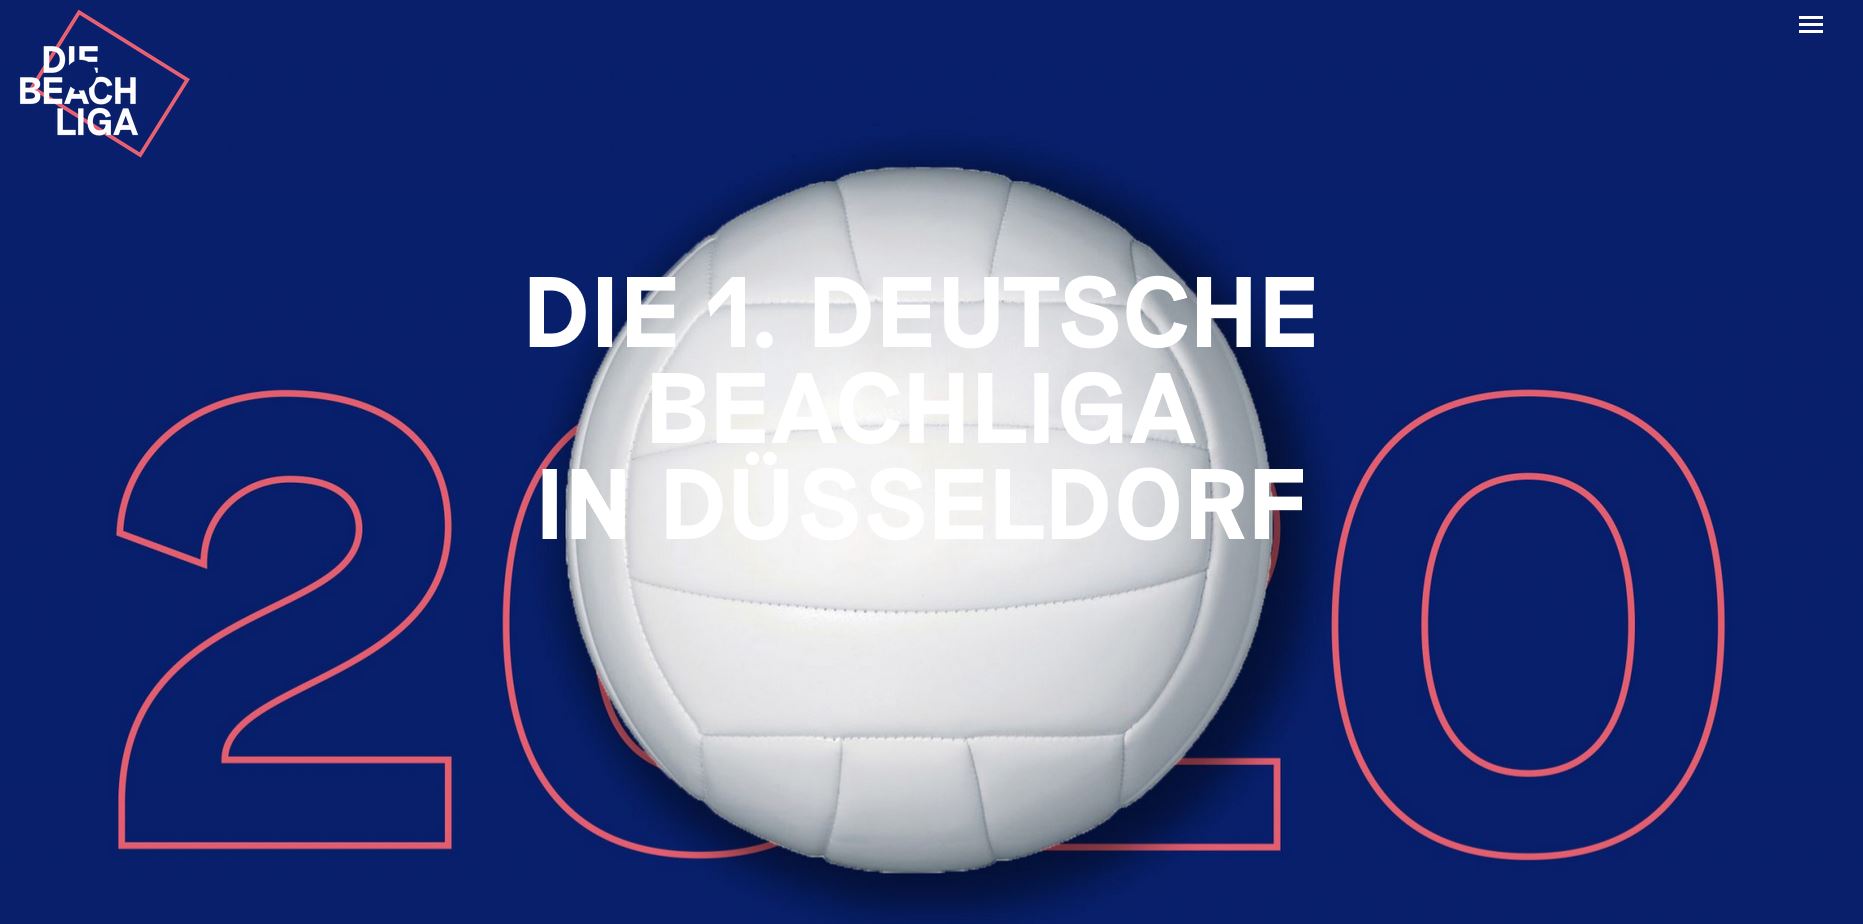 Trio of Beach Volleyball friends launch revolutionary Beach-Liga in Germany CEV